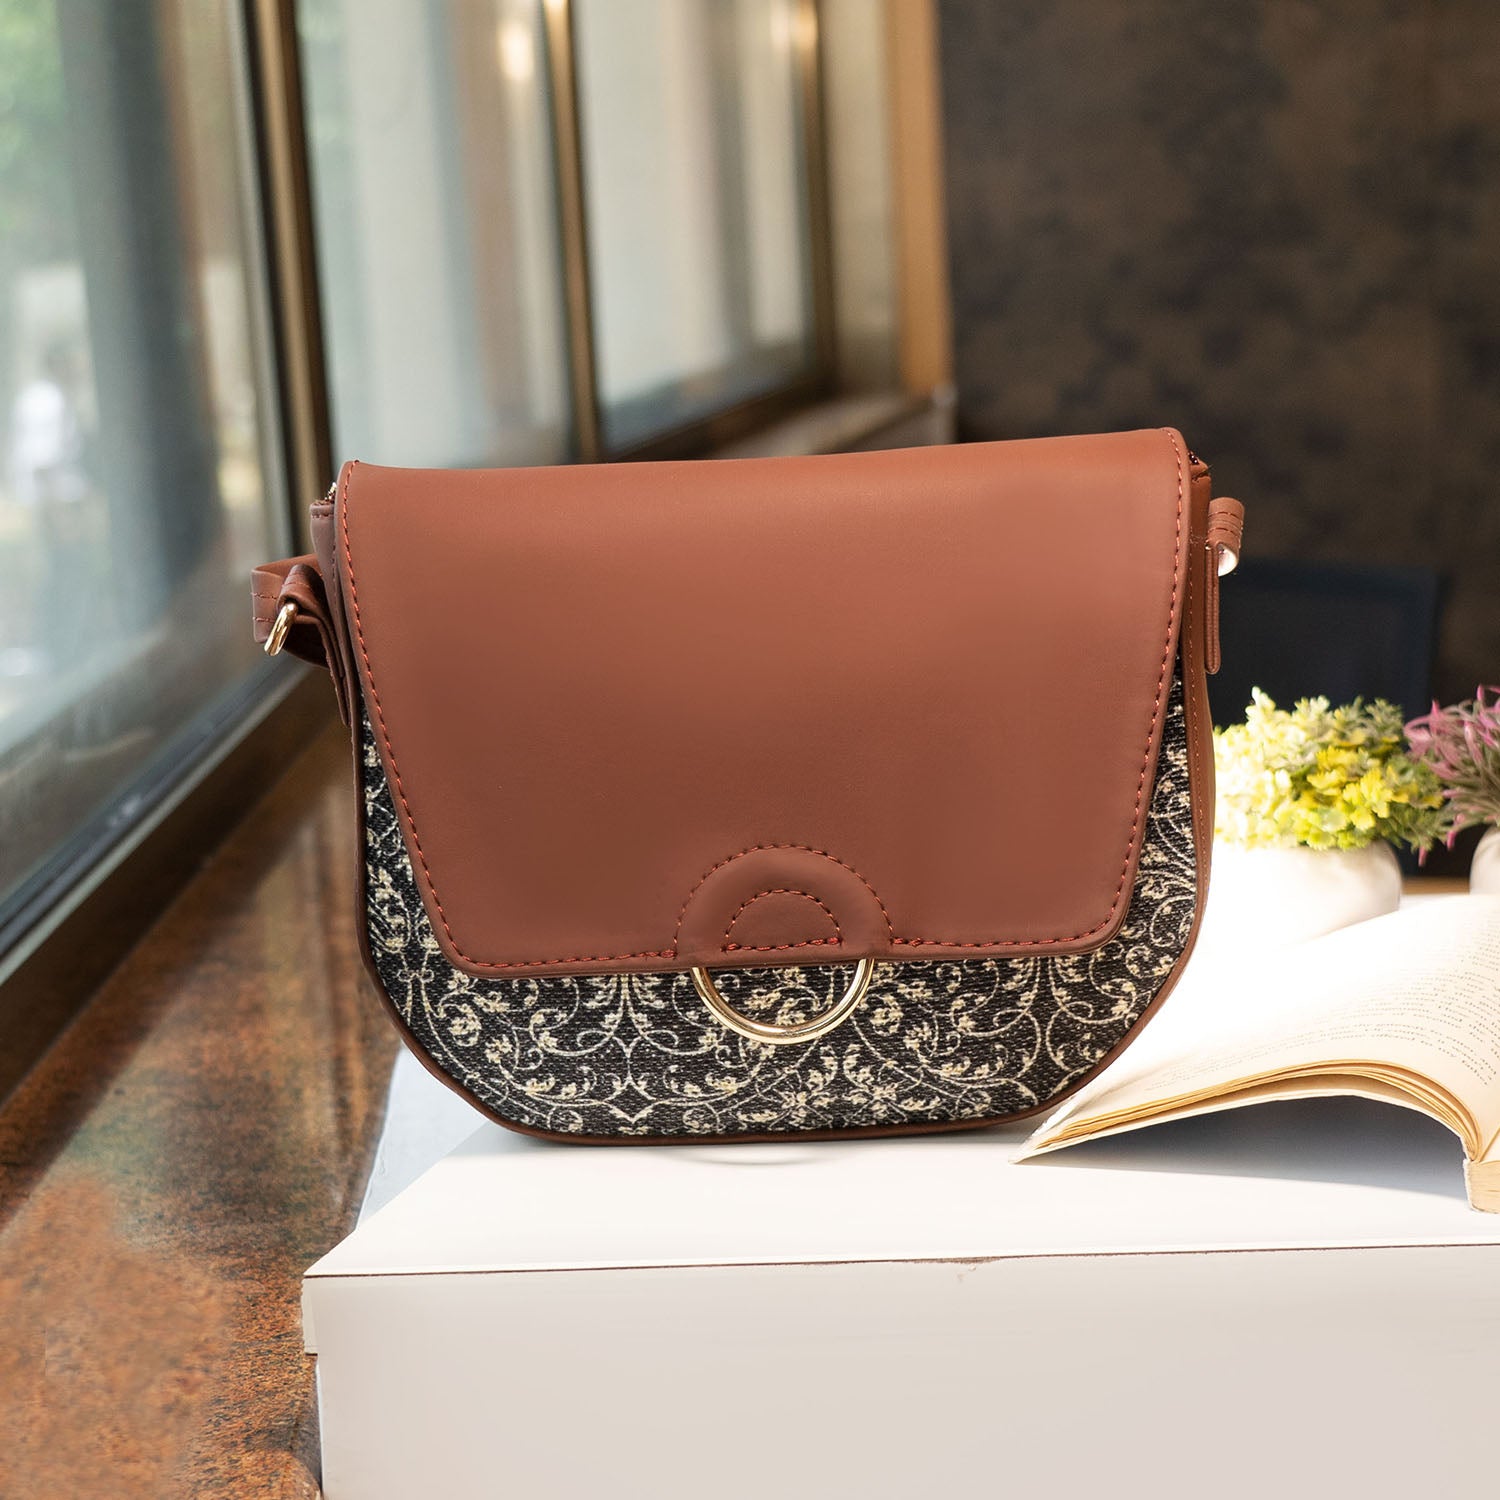 sun + lace scalloped leather purse in rust - Little